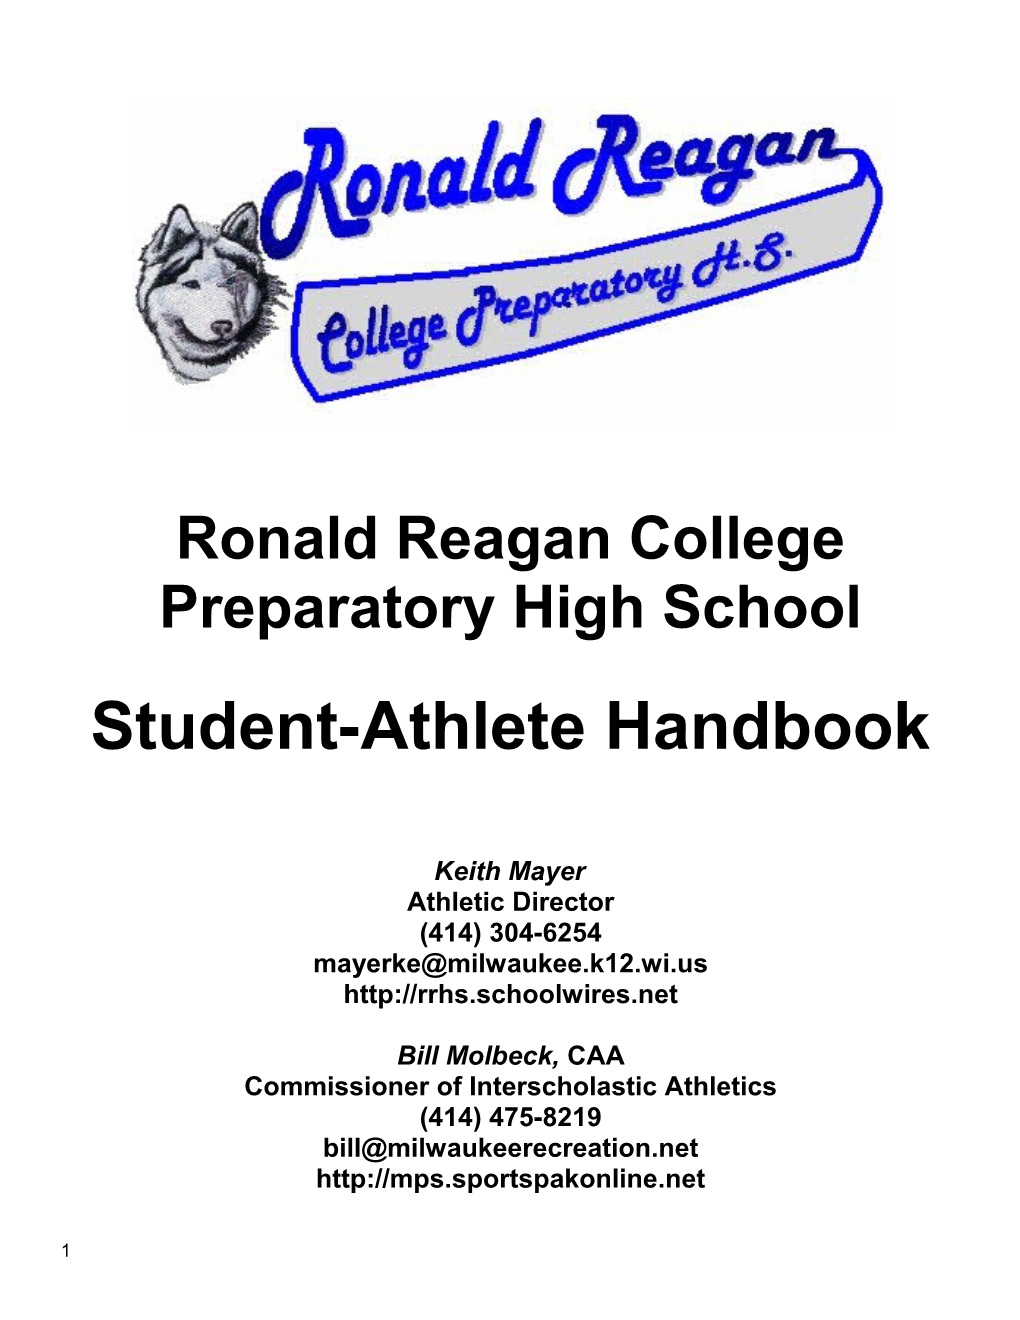 Ronald Reagan College Preparatory High School